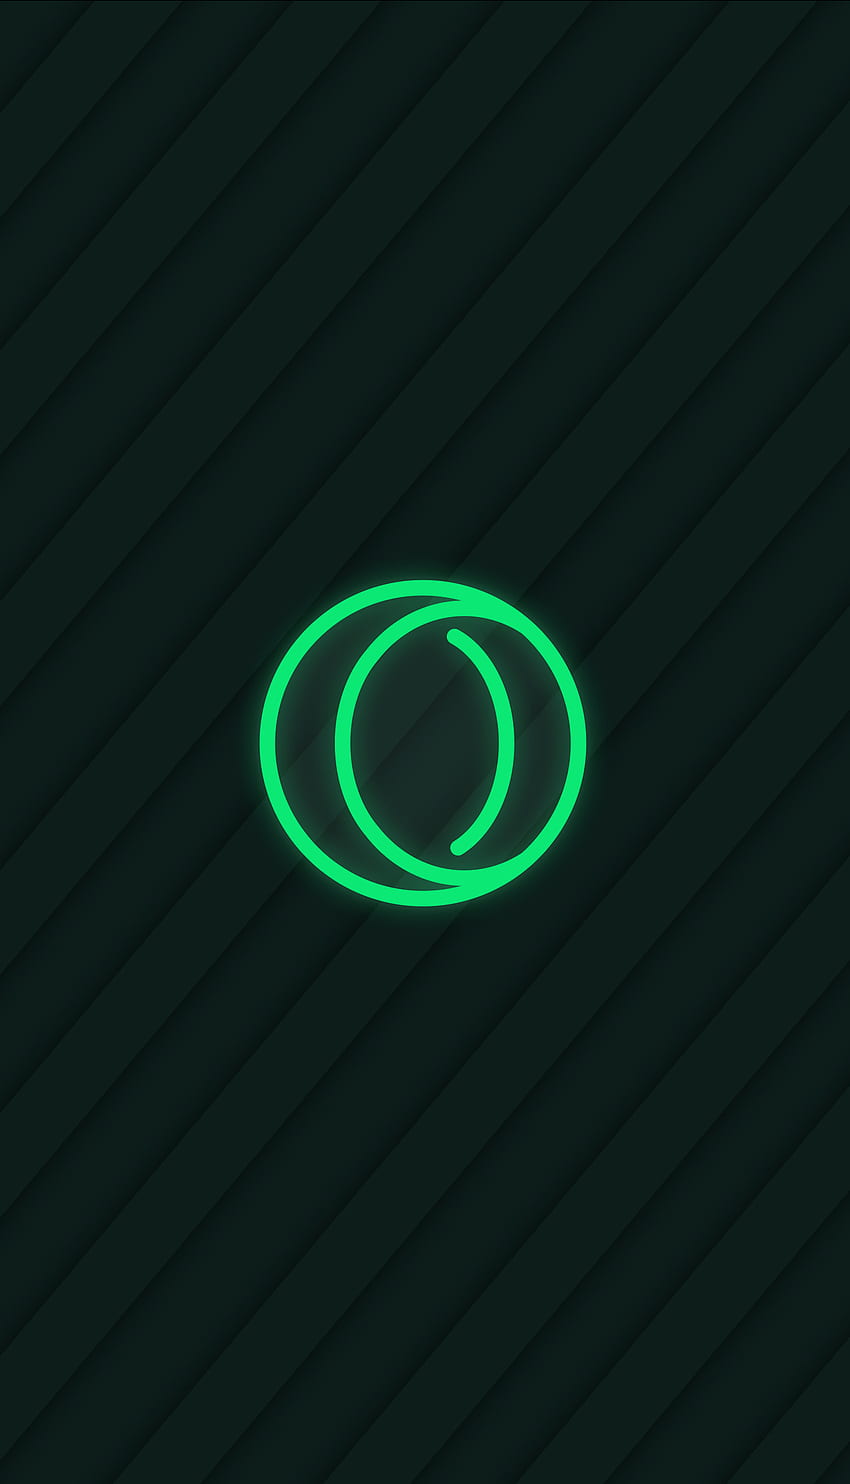 opera GX neón verde, formal, símbolo, neón, visual_effect_lighting, verde fondo de pantalla del teléfono